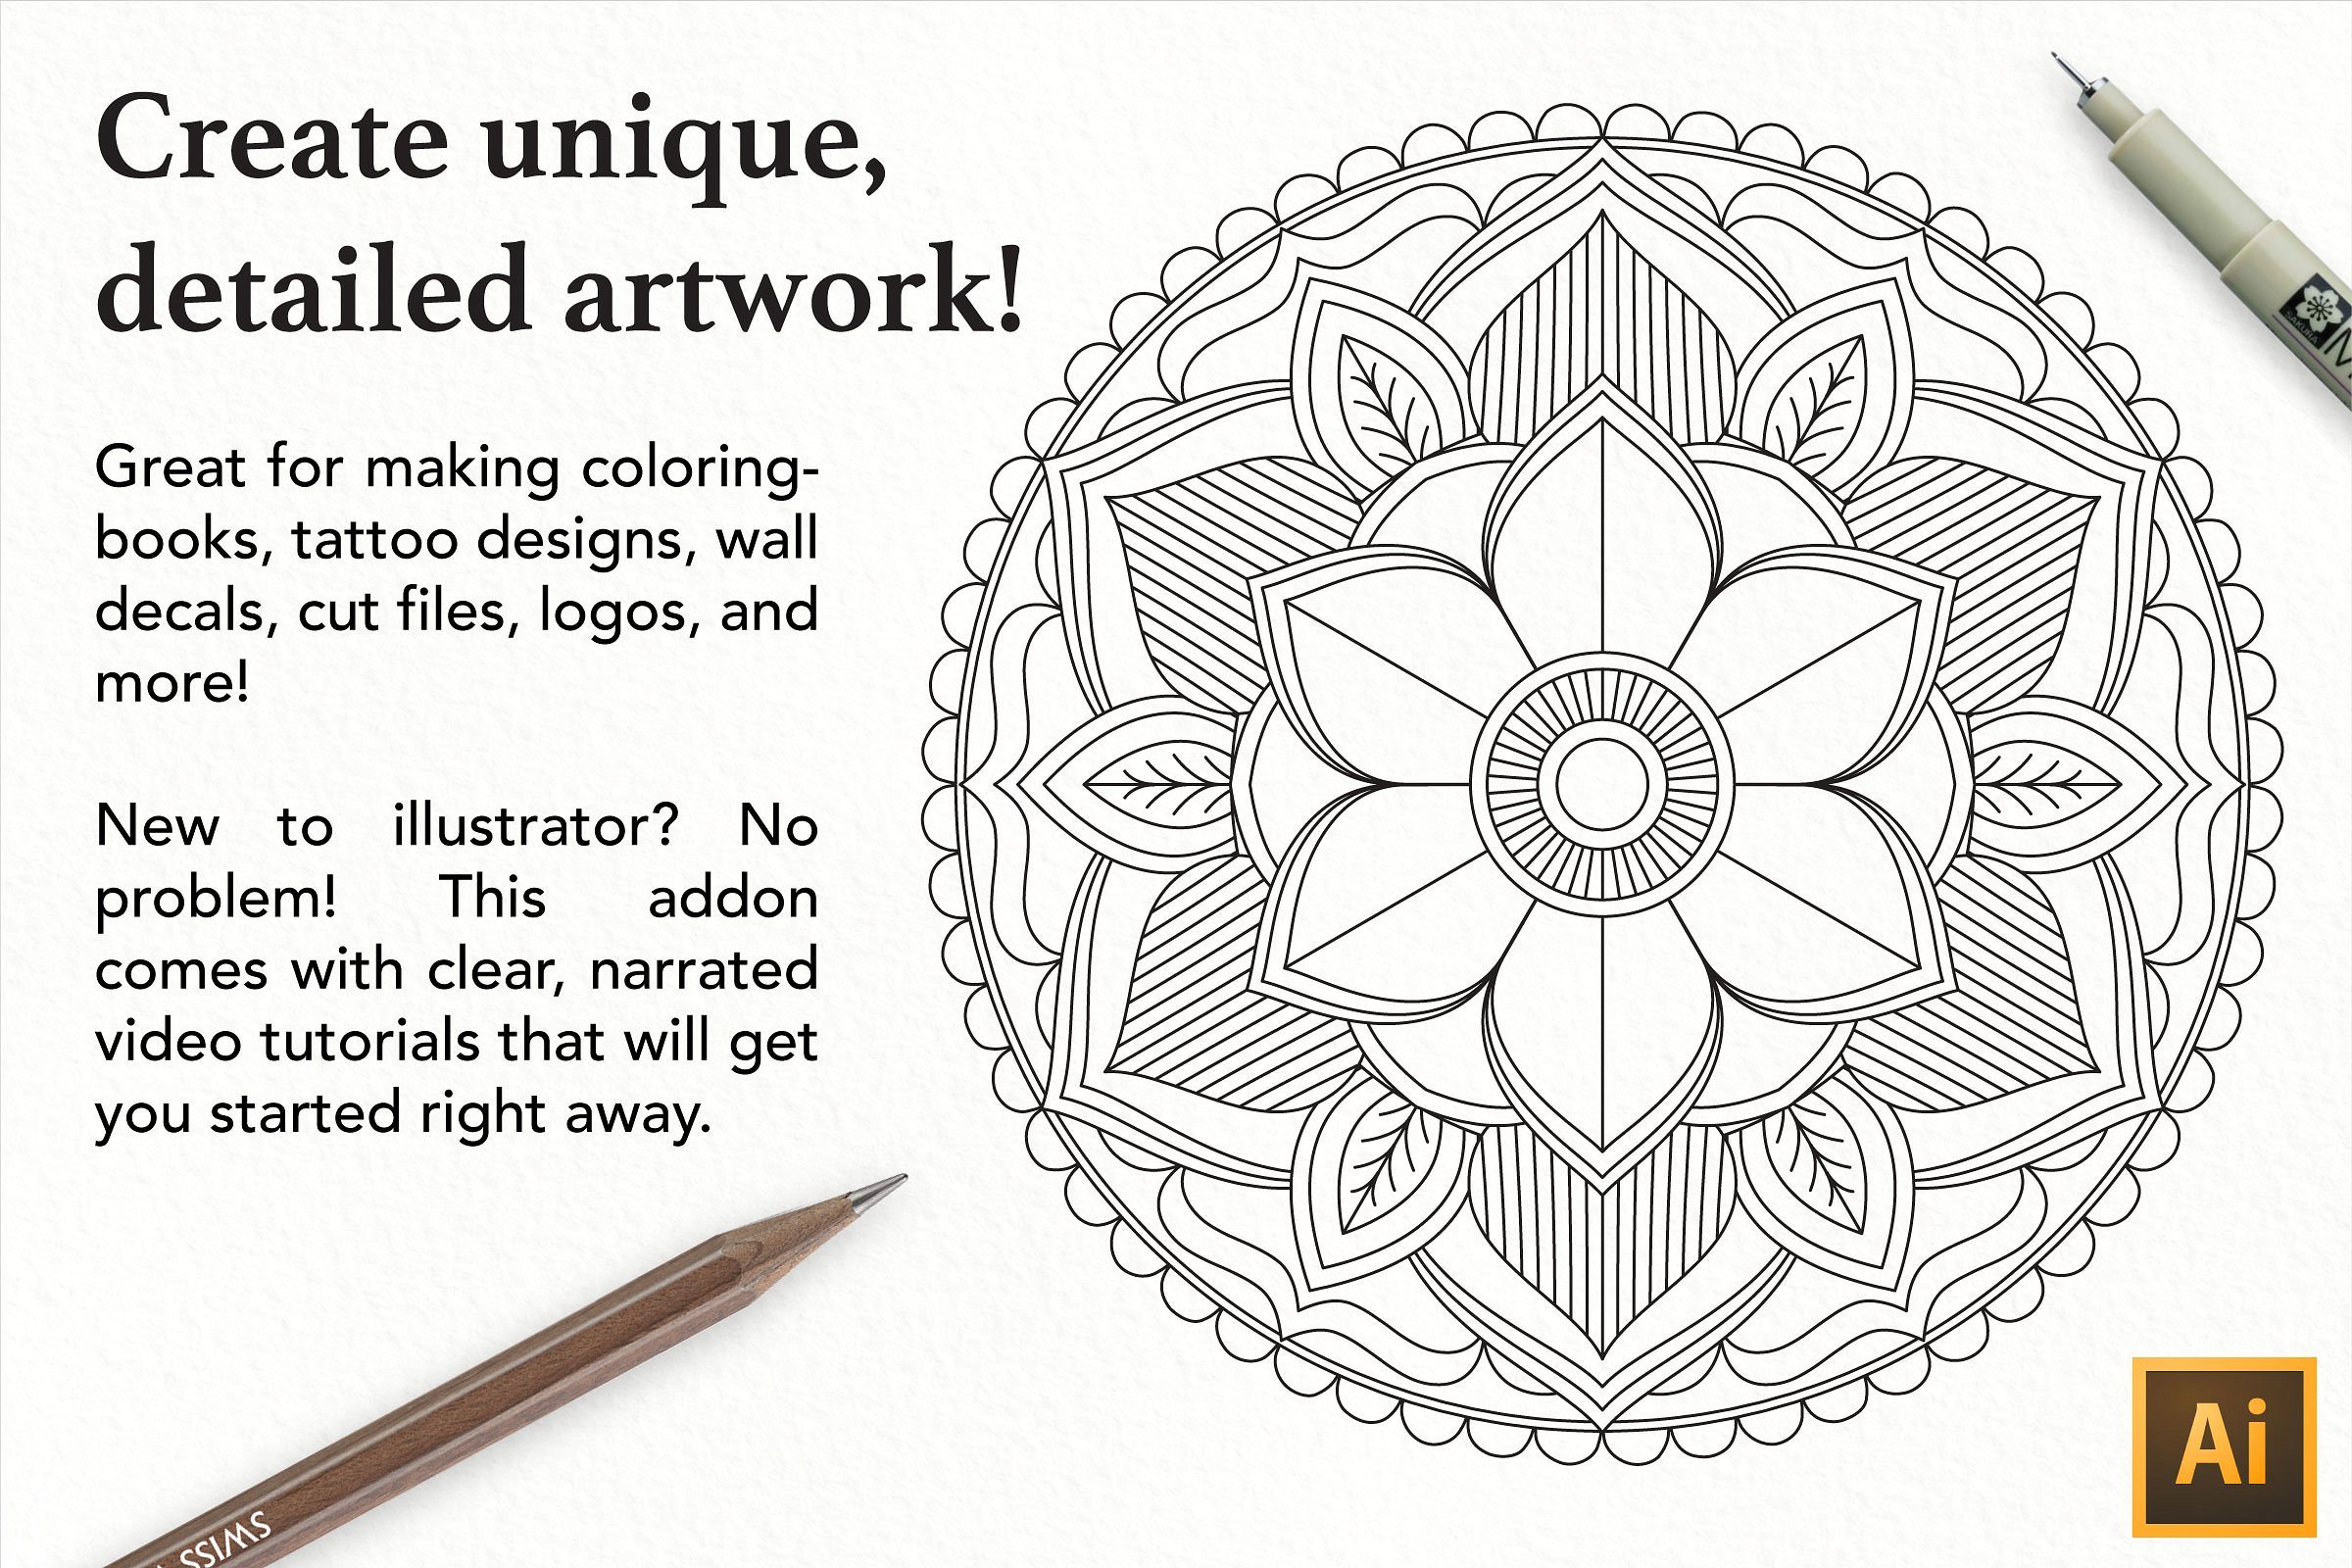 Mandala Creator For Illustrator - Original Edition